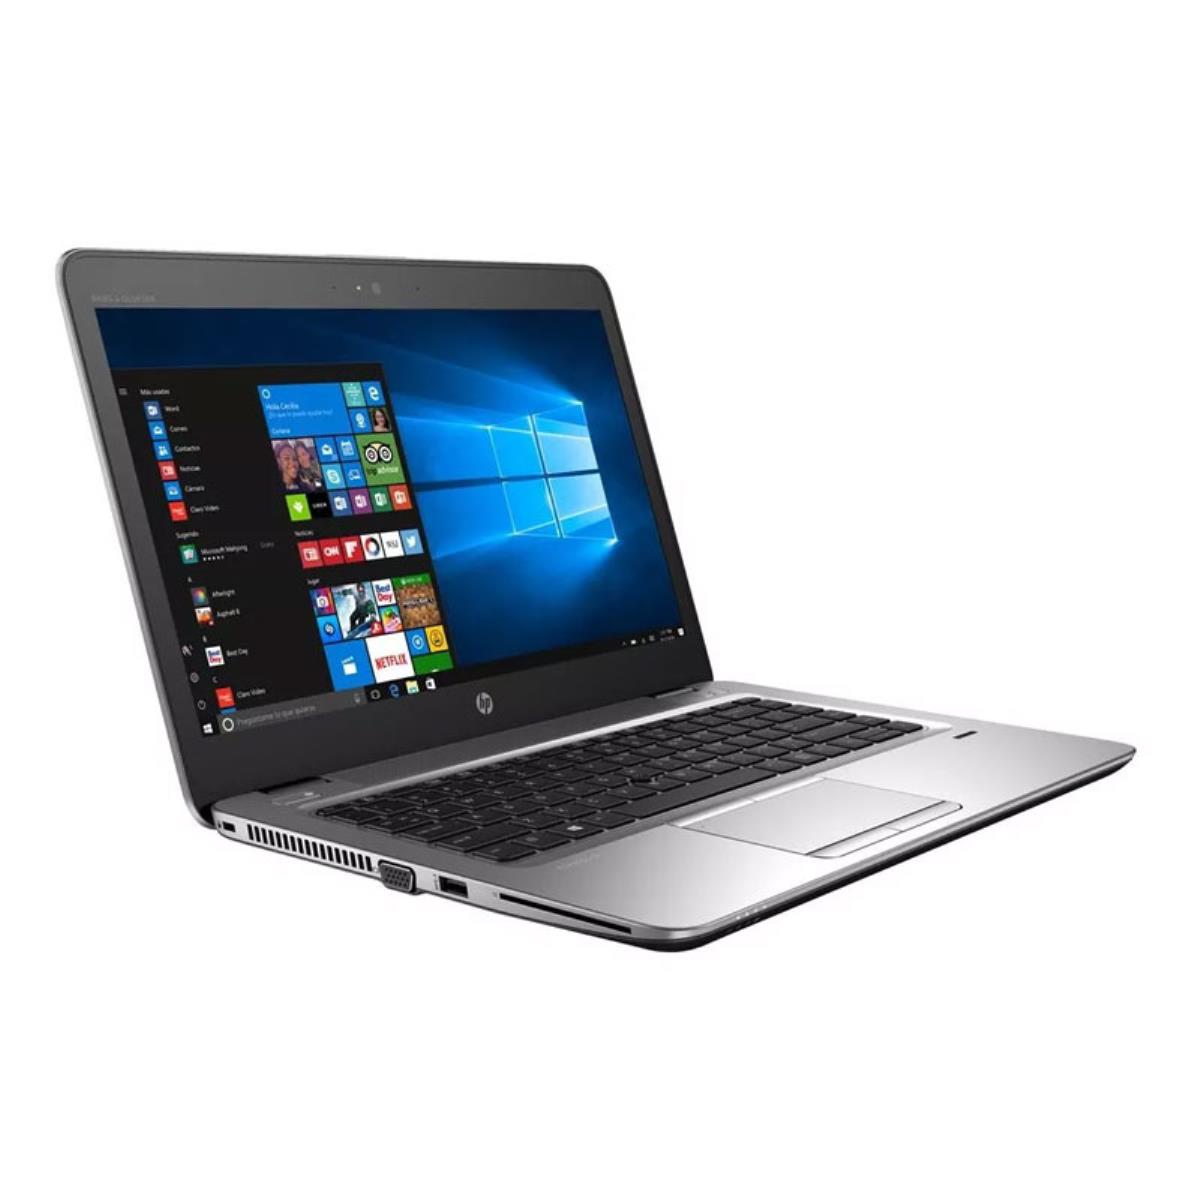 Portátil Ultrabook HP Elitebook 840 G3 GRADO B (Intel Core i7 6500U 2.5Ghz/8GB/256SSD-M.2/14FHD/NO-DVD/W10P) Preinstalado